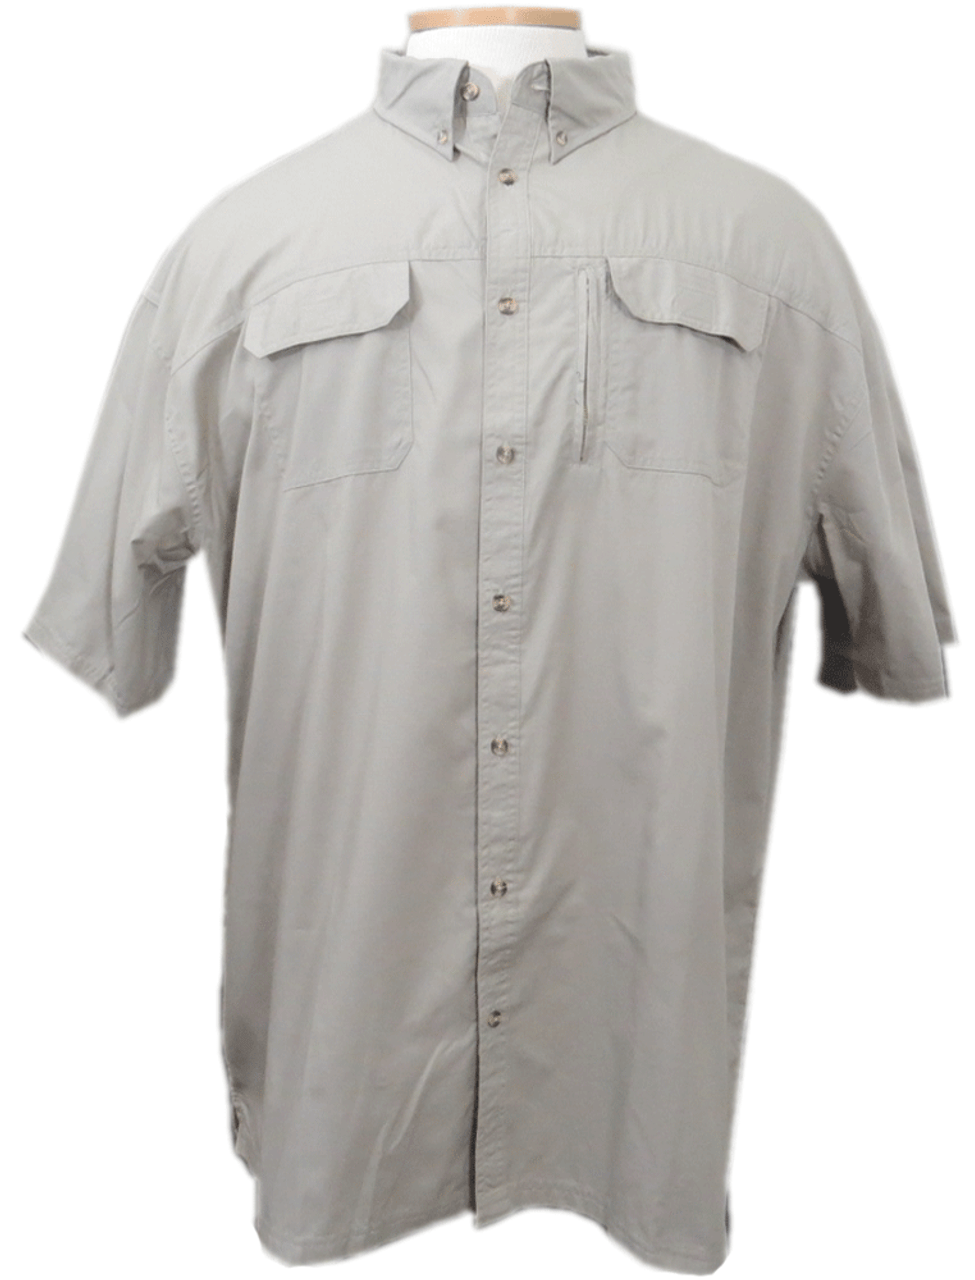 Falcon Bay Fishing Shirt 3X Black/White/Multi